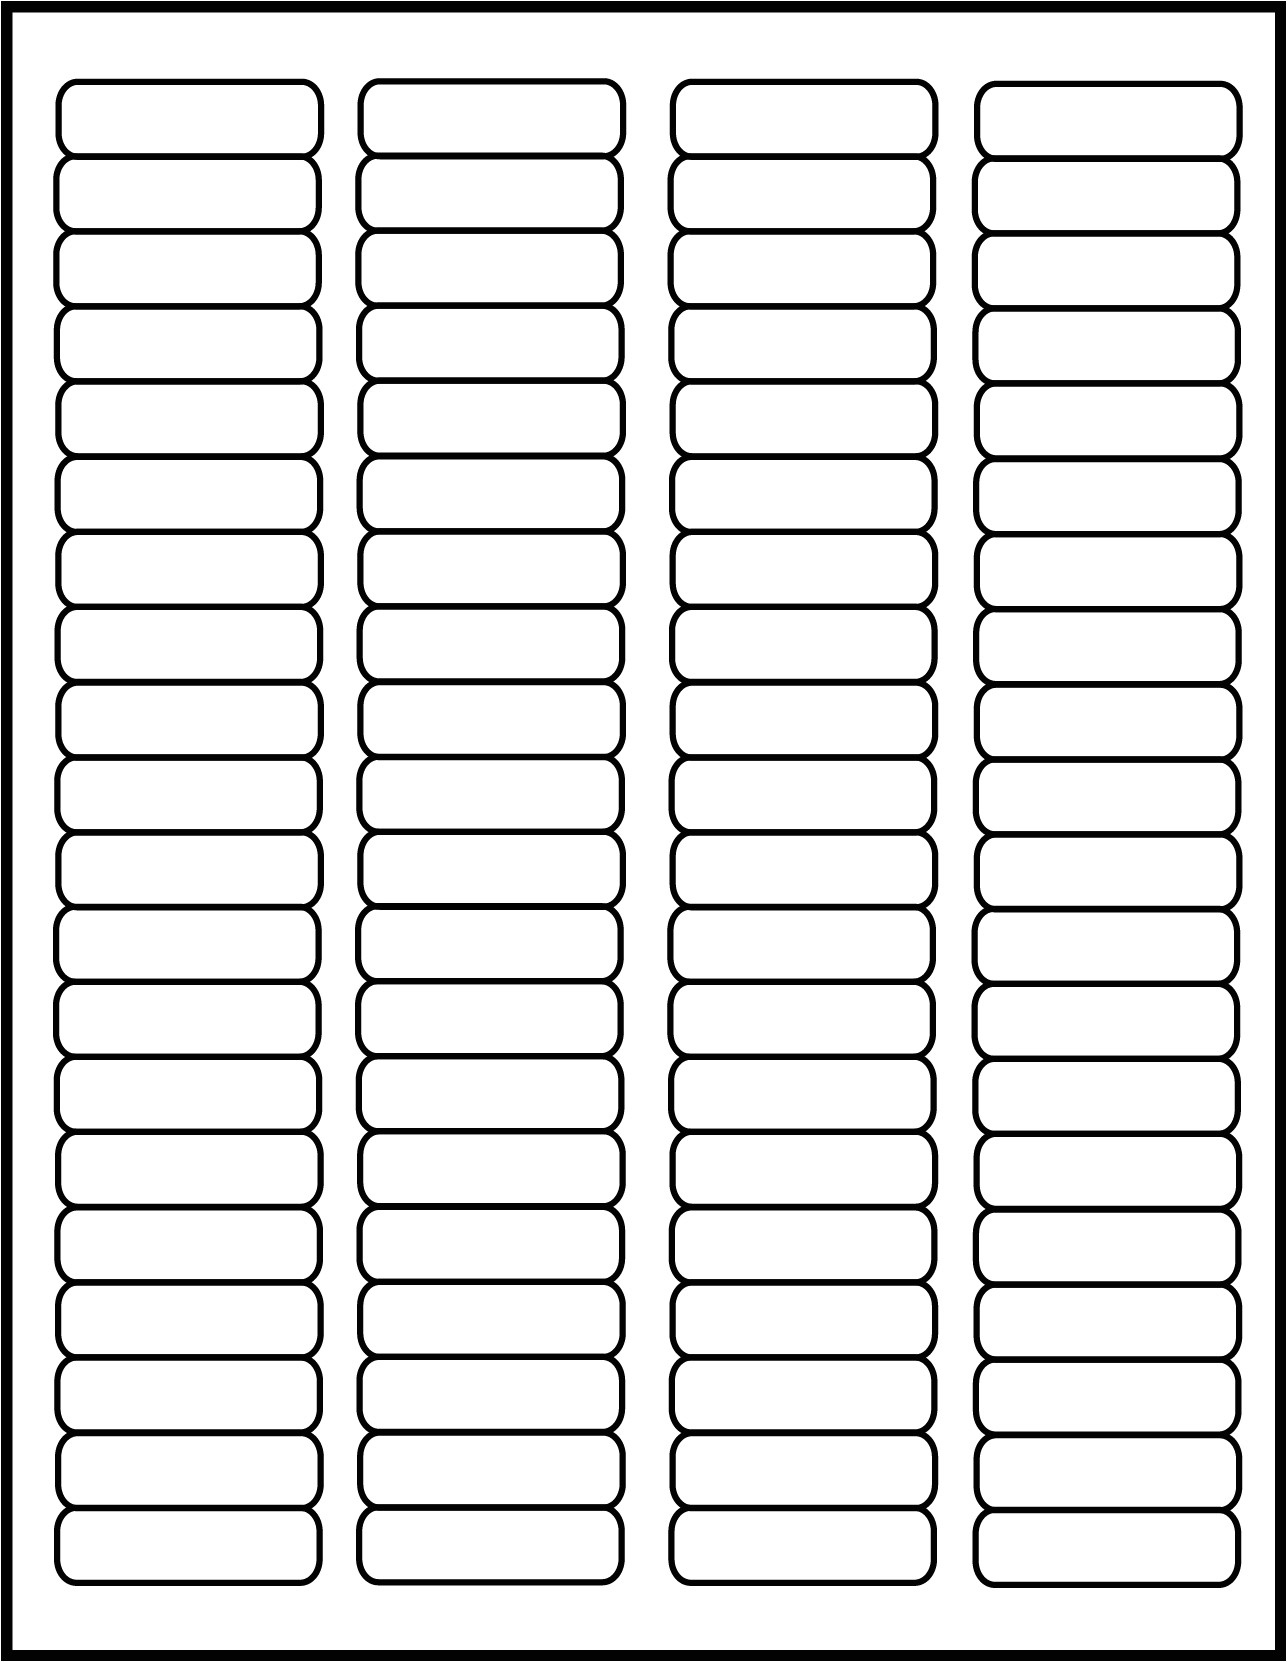 avery return address labels 80 per sheet template